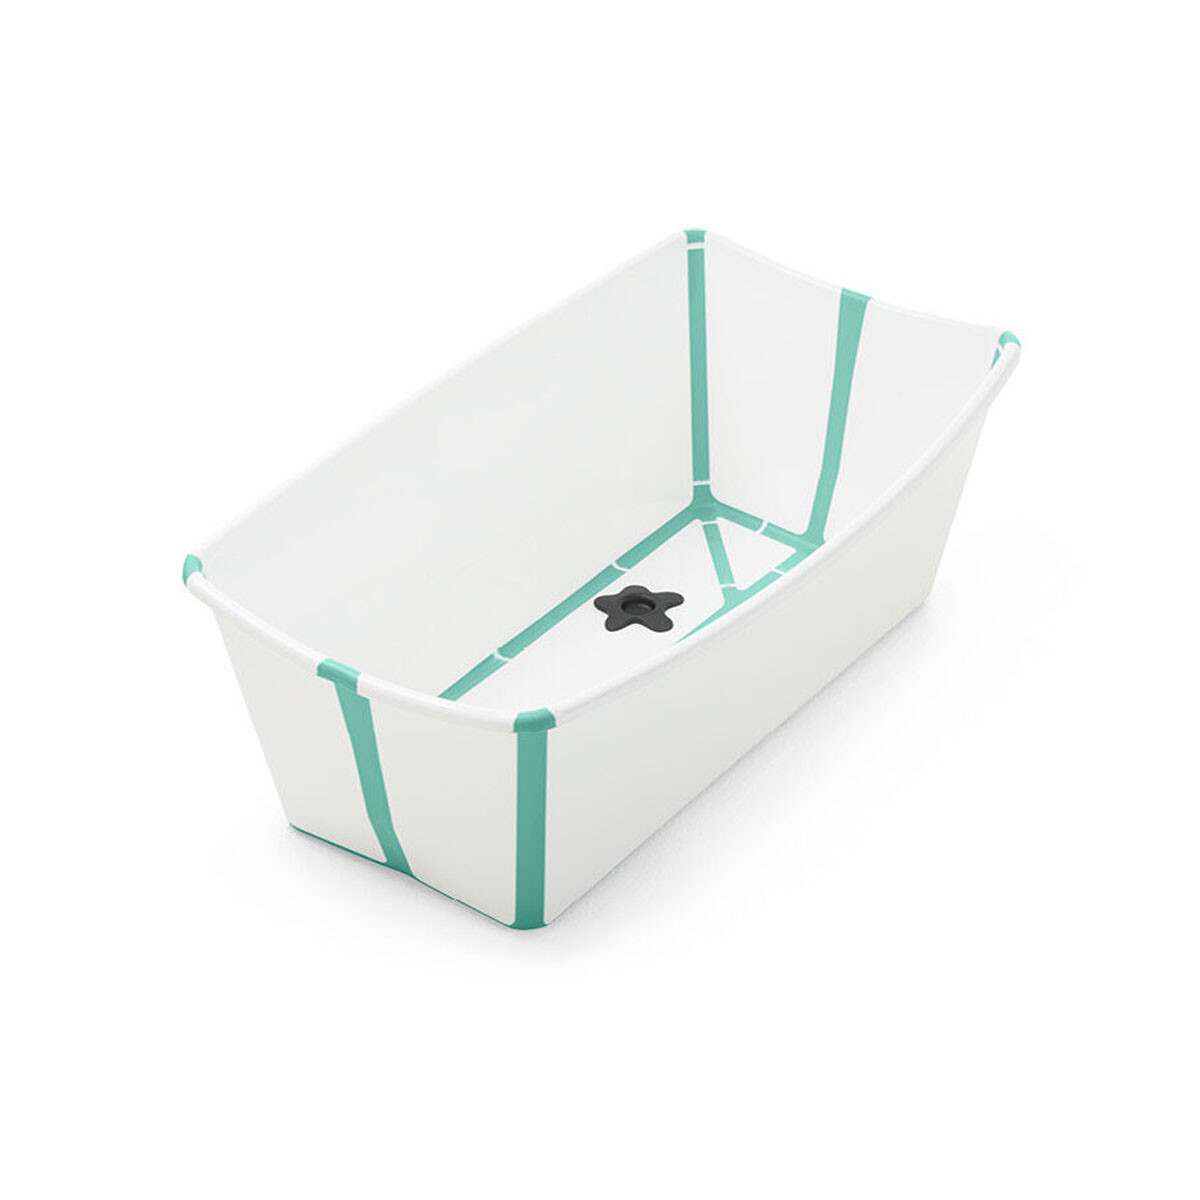 Bañito Plegable Flexi bath stokke - Blanco Aqua 